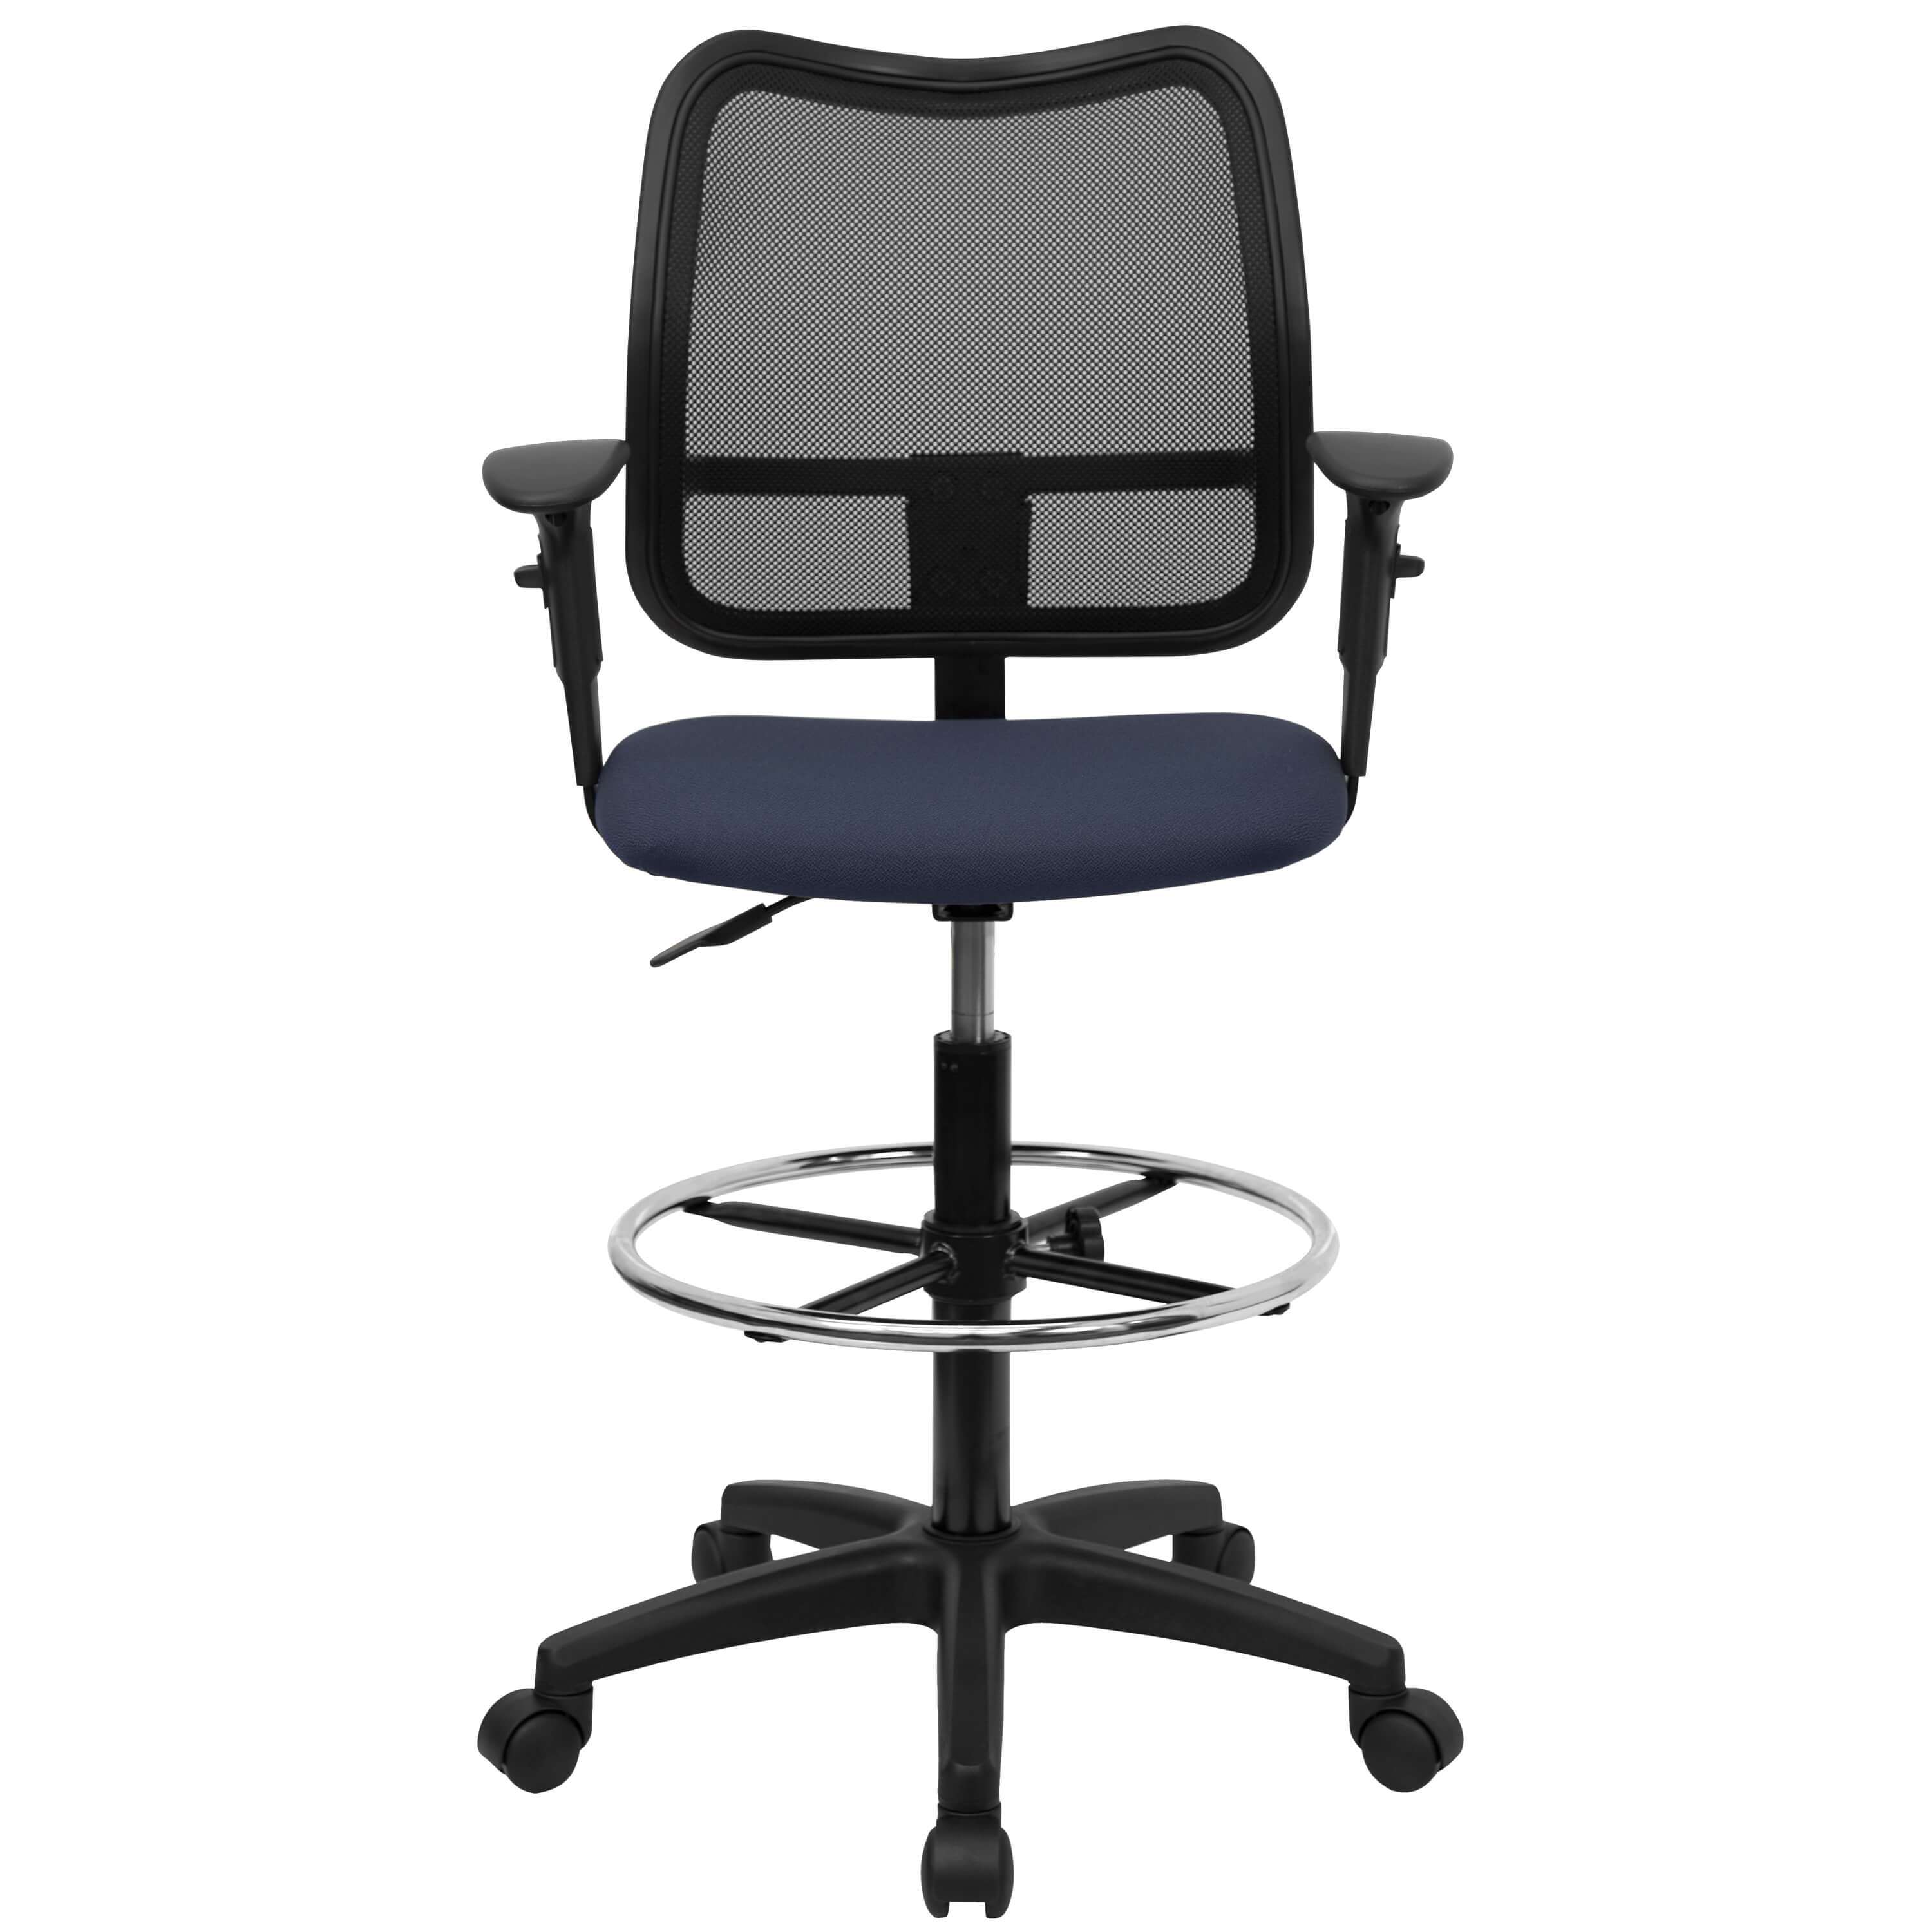 Cool desk chairs CUB WL A277 NVY AD GG FLA